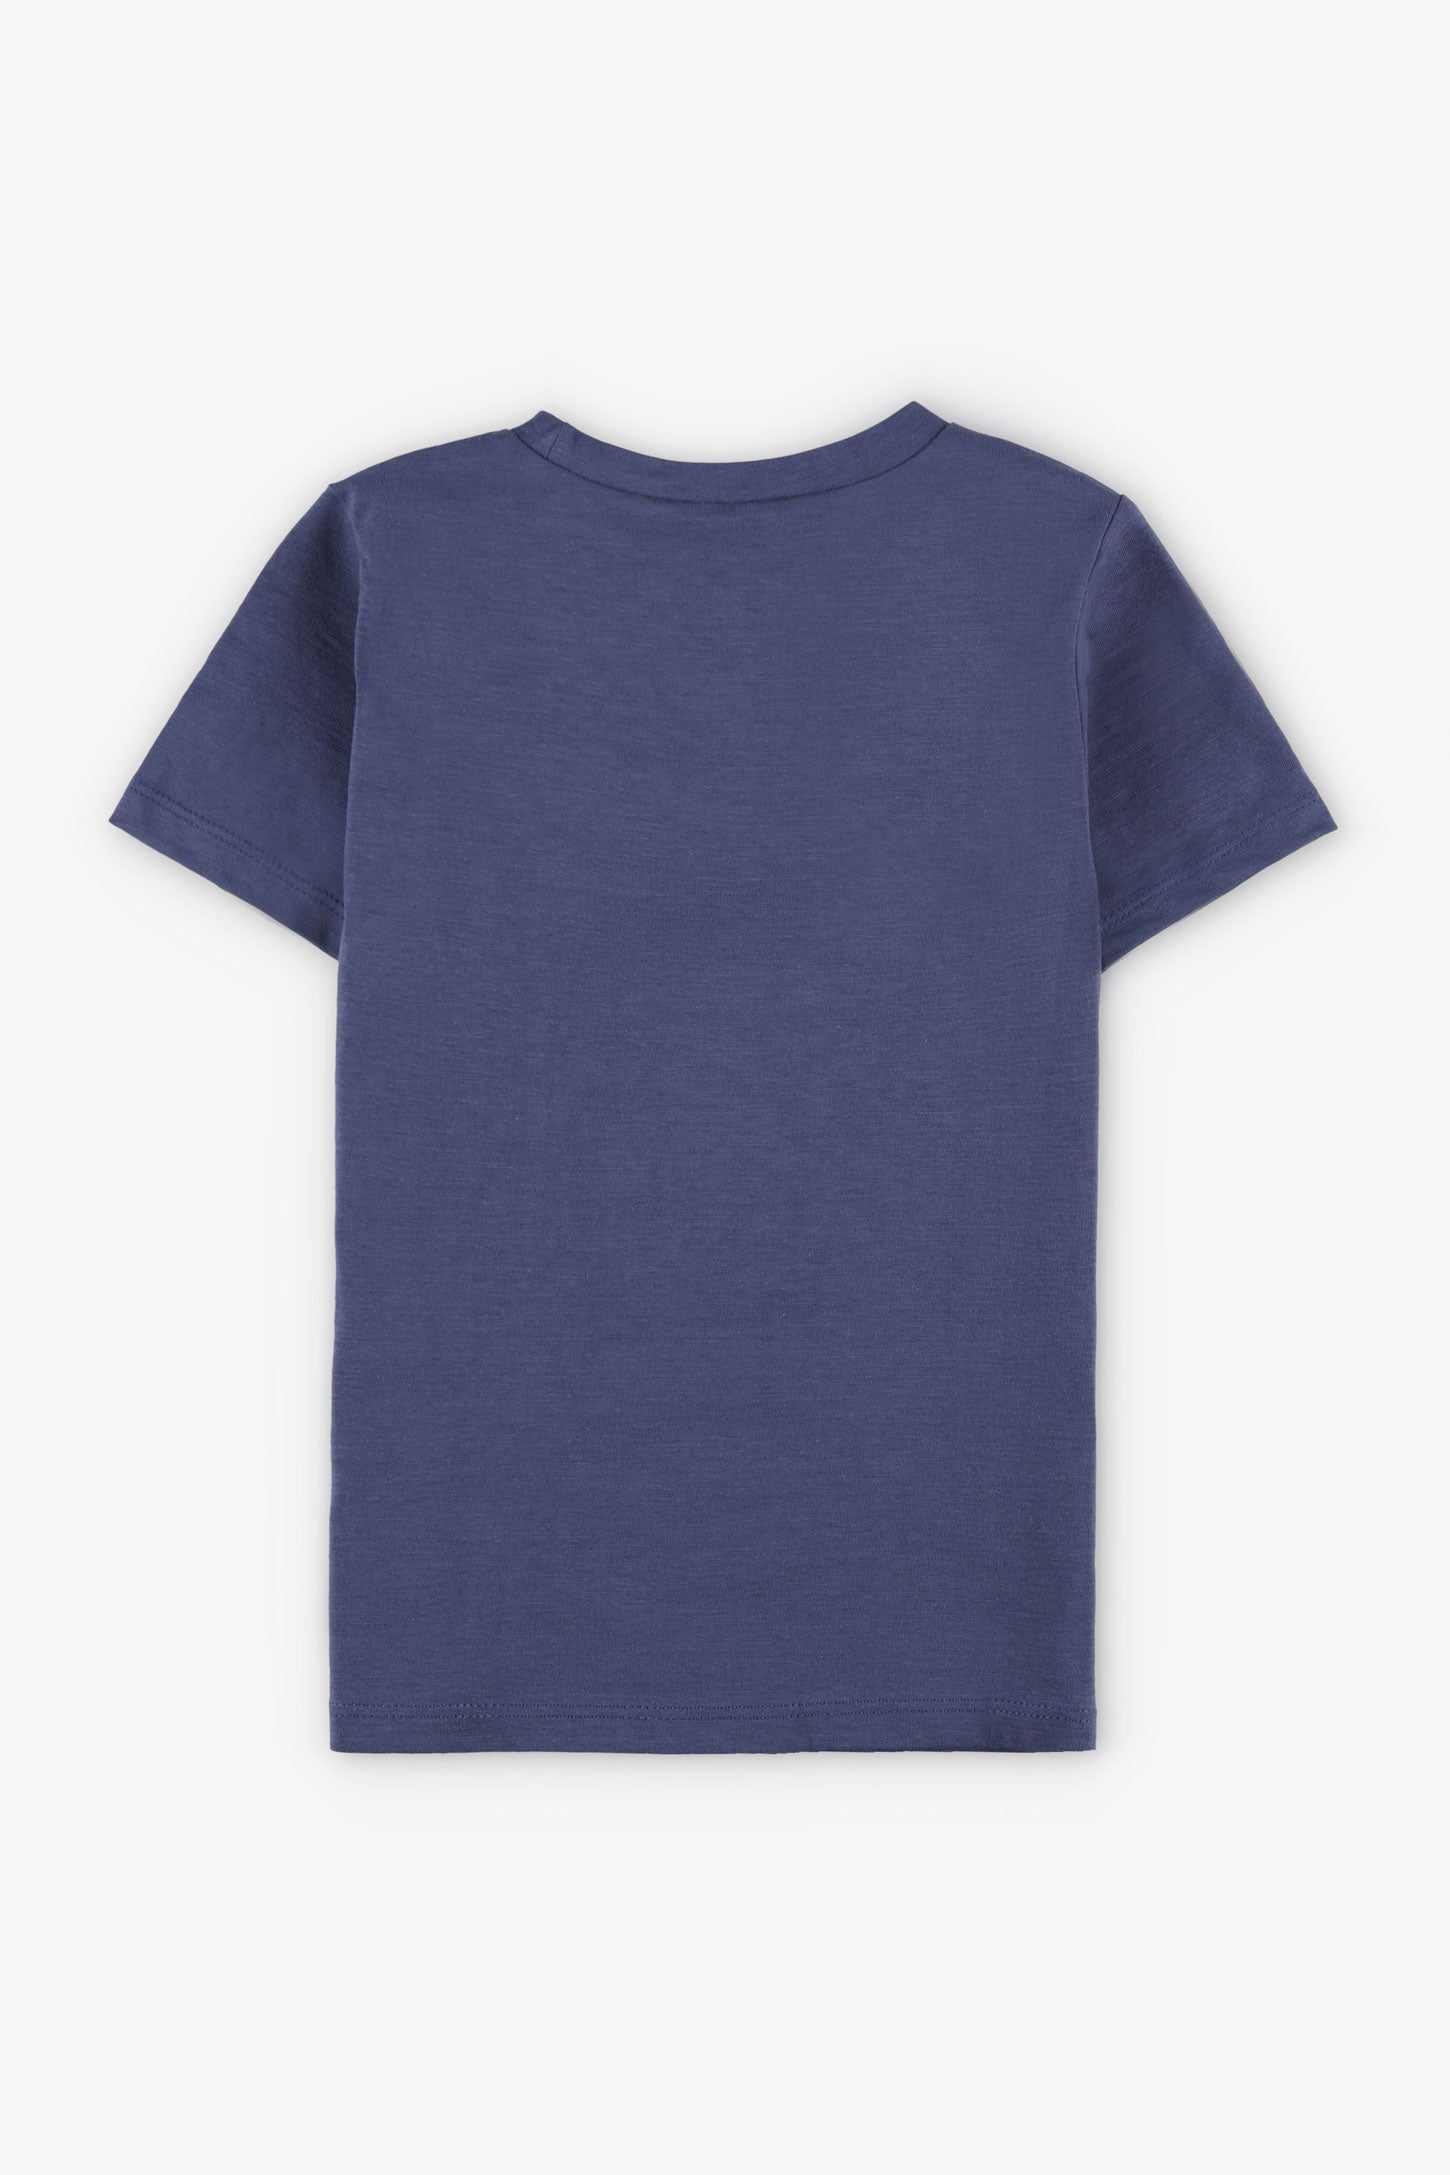 T-shirt col rond imprimé, 2/20$ - Enfant garçon && MARIN